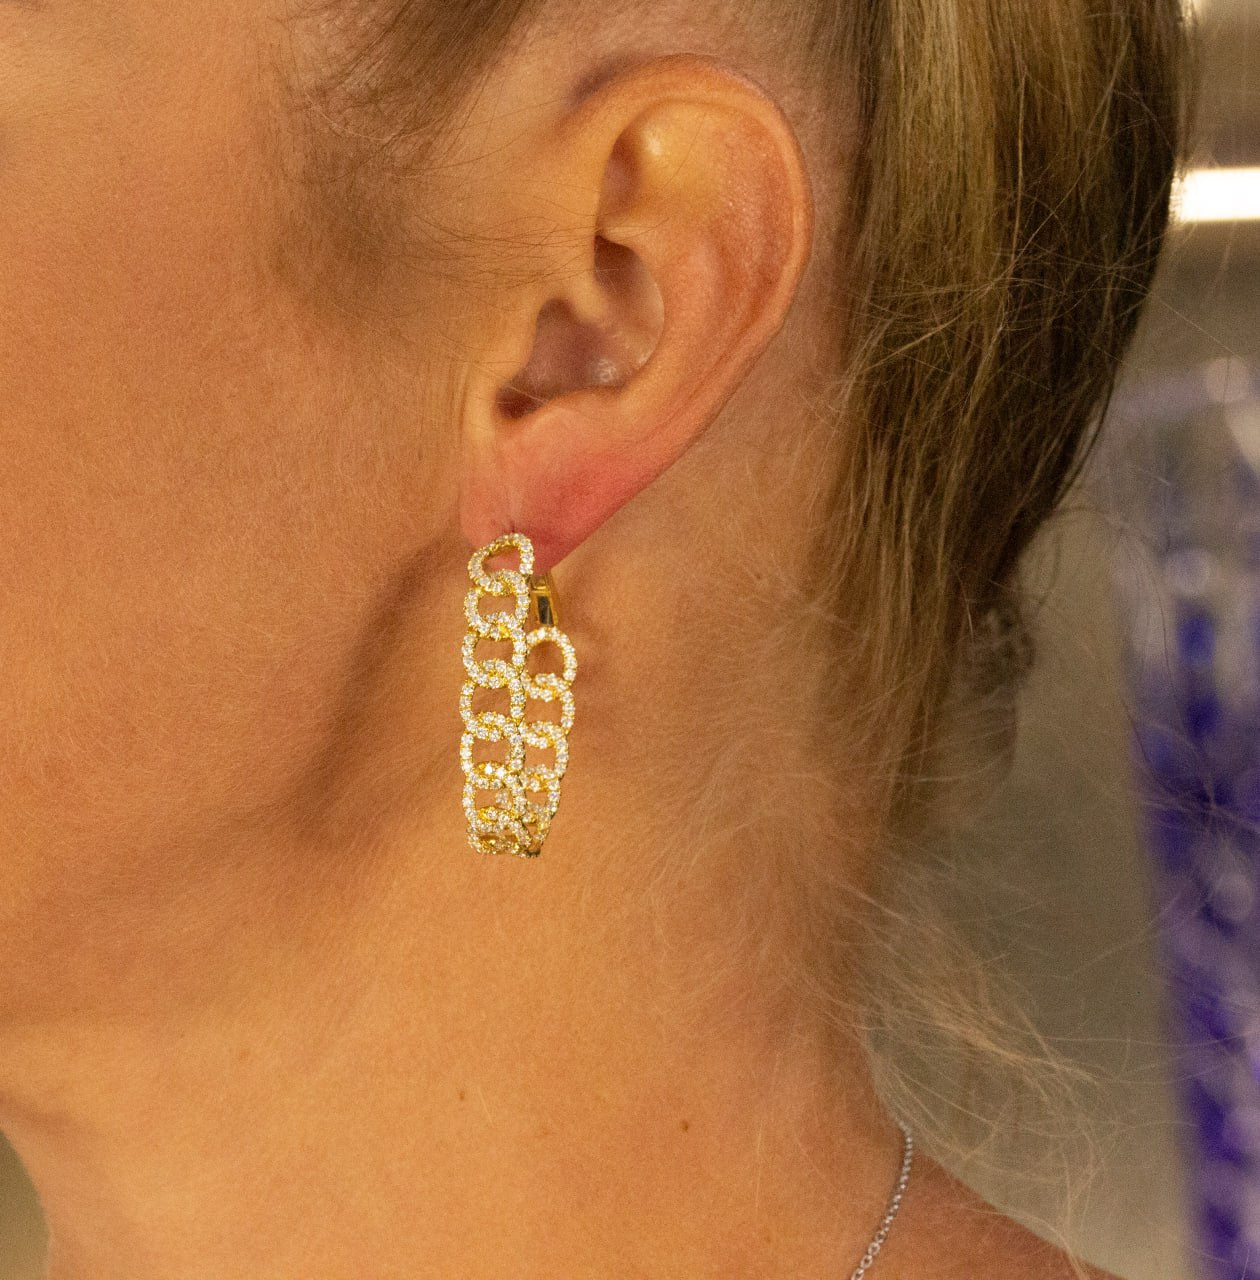 ECJ Collection 18K Yellow Gold Diamond Earrings 3.65ct. tw